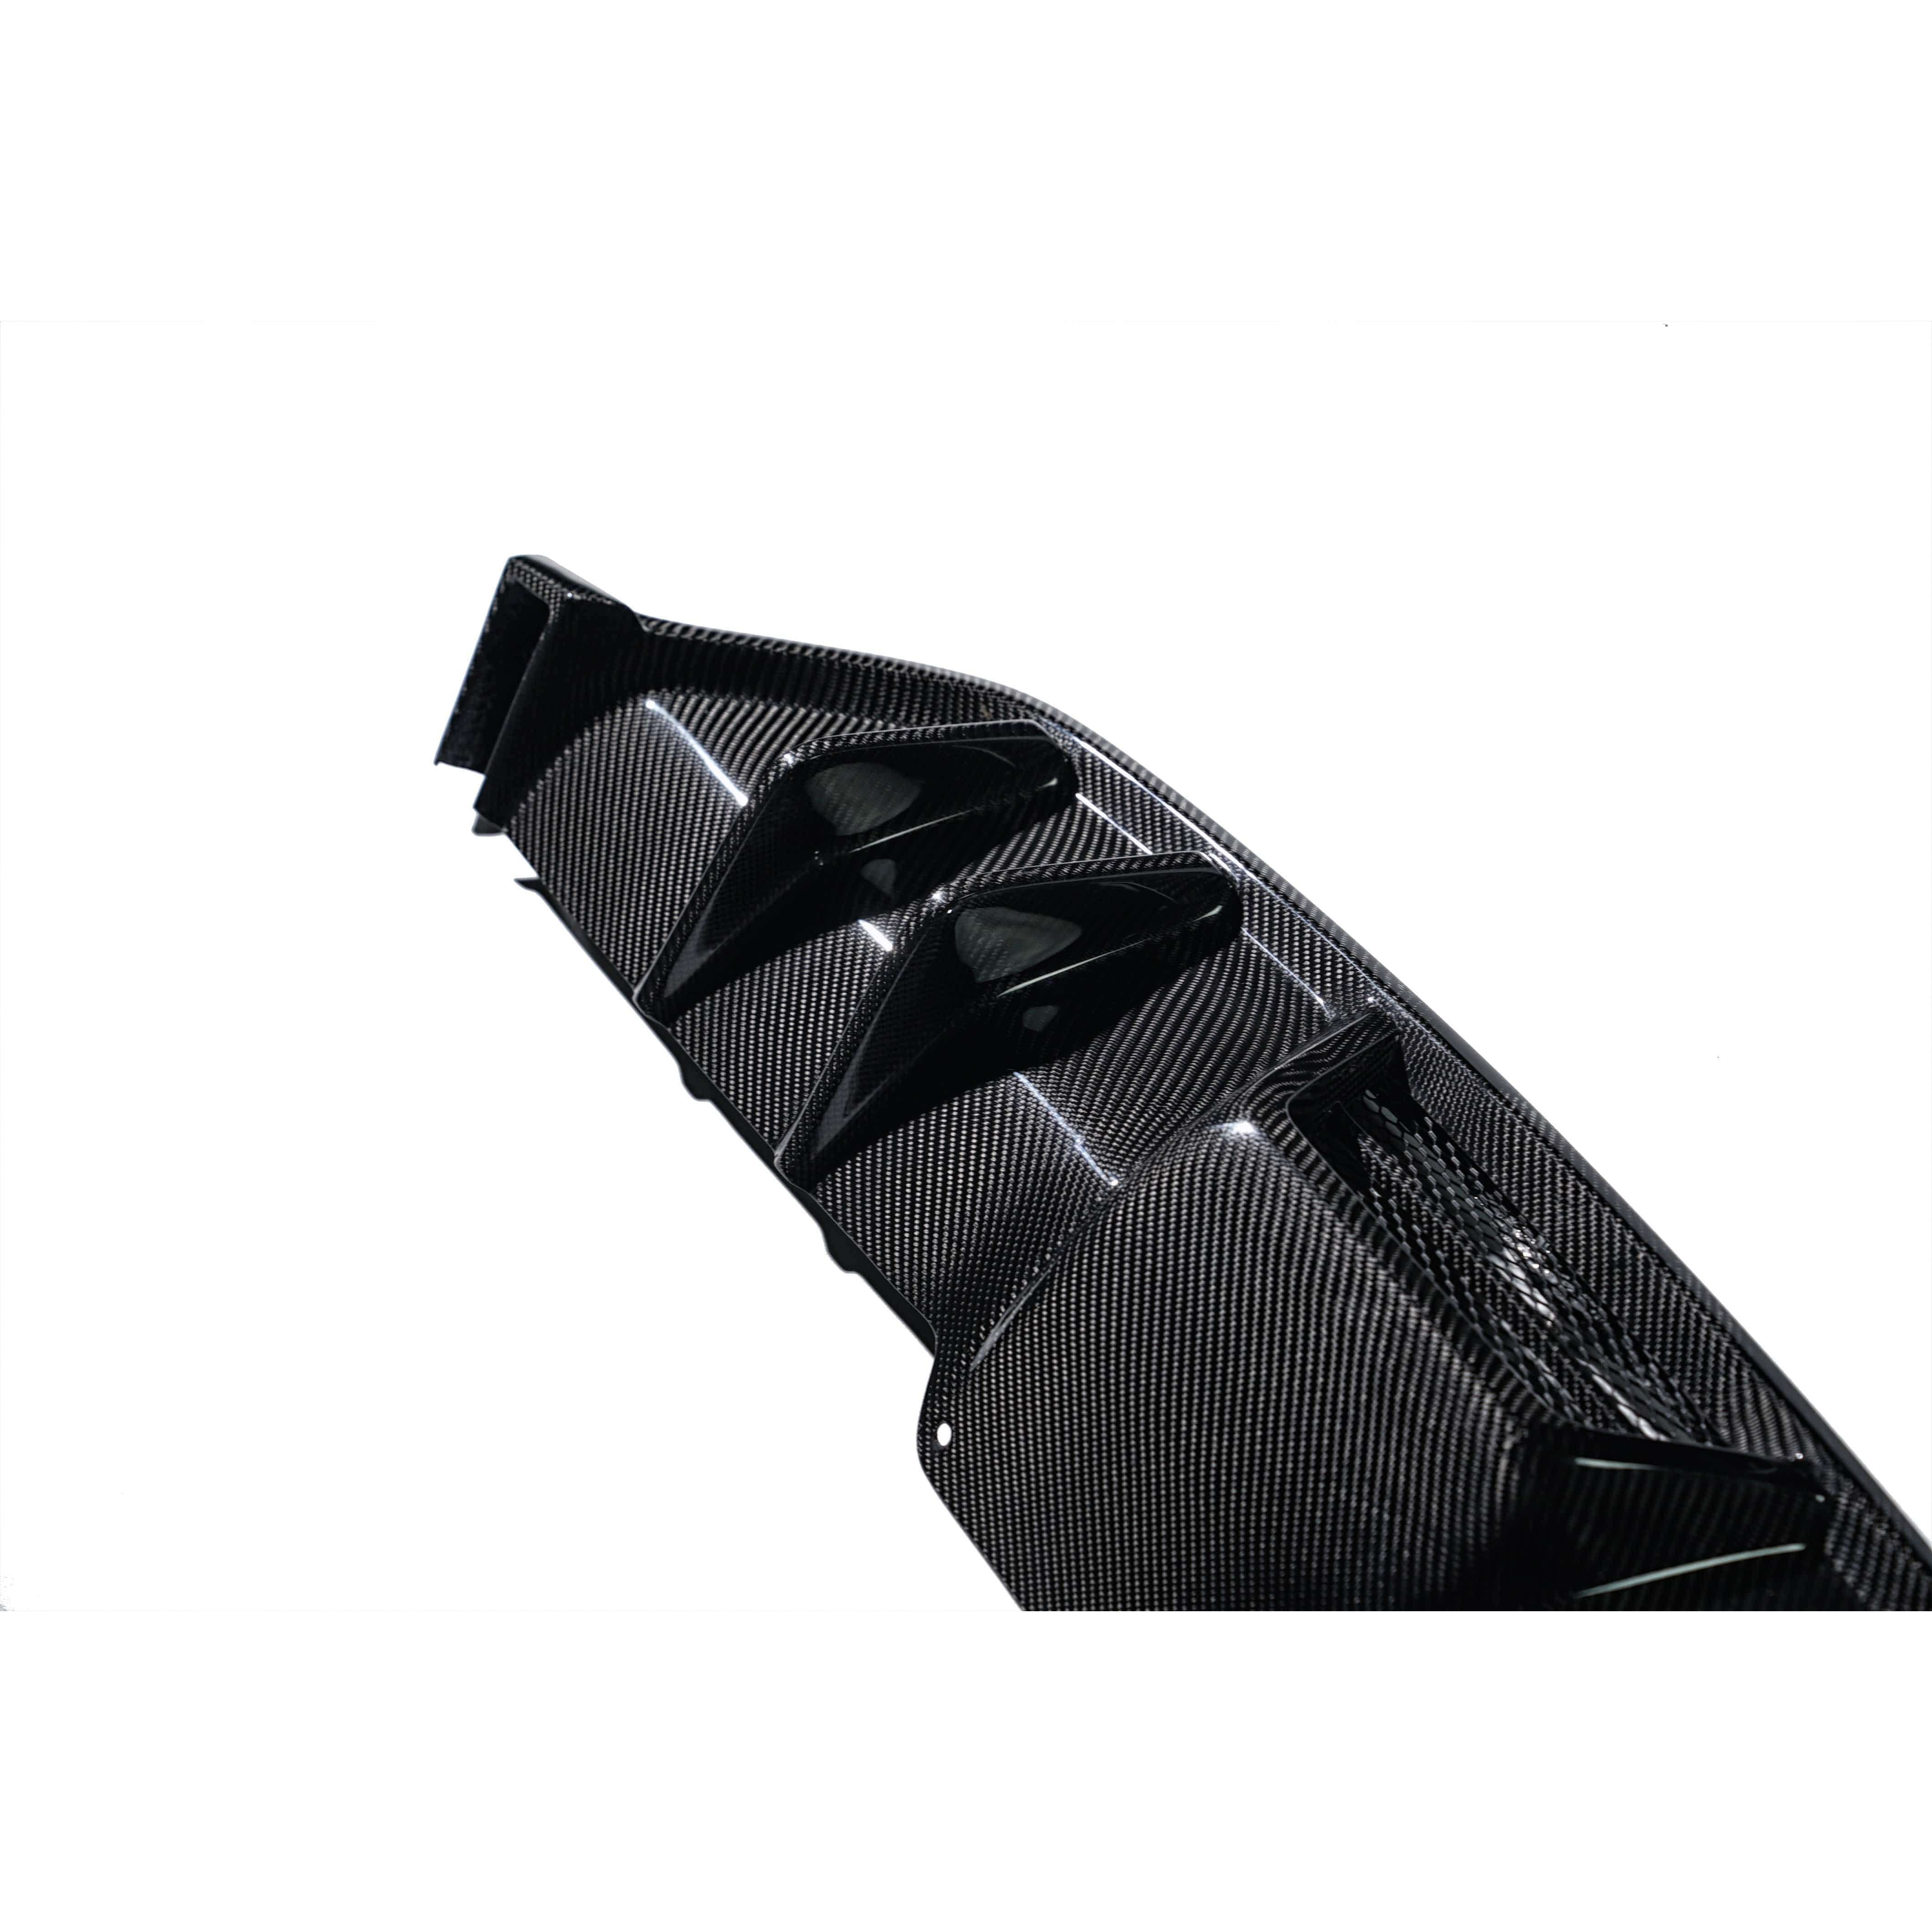 Genesis G70 carbon fiber rear diffuser V2 - ADRO 